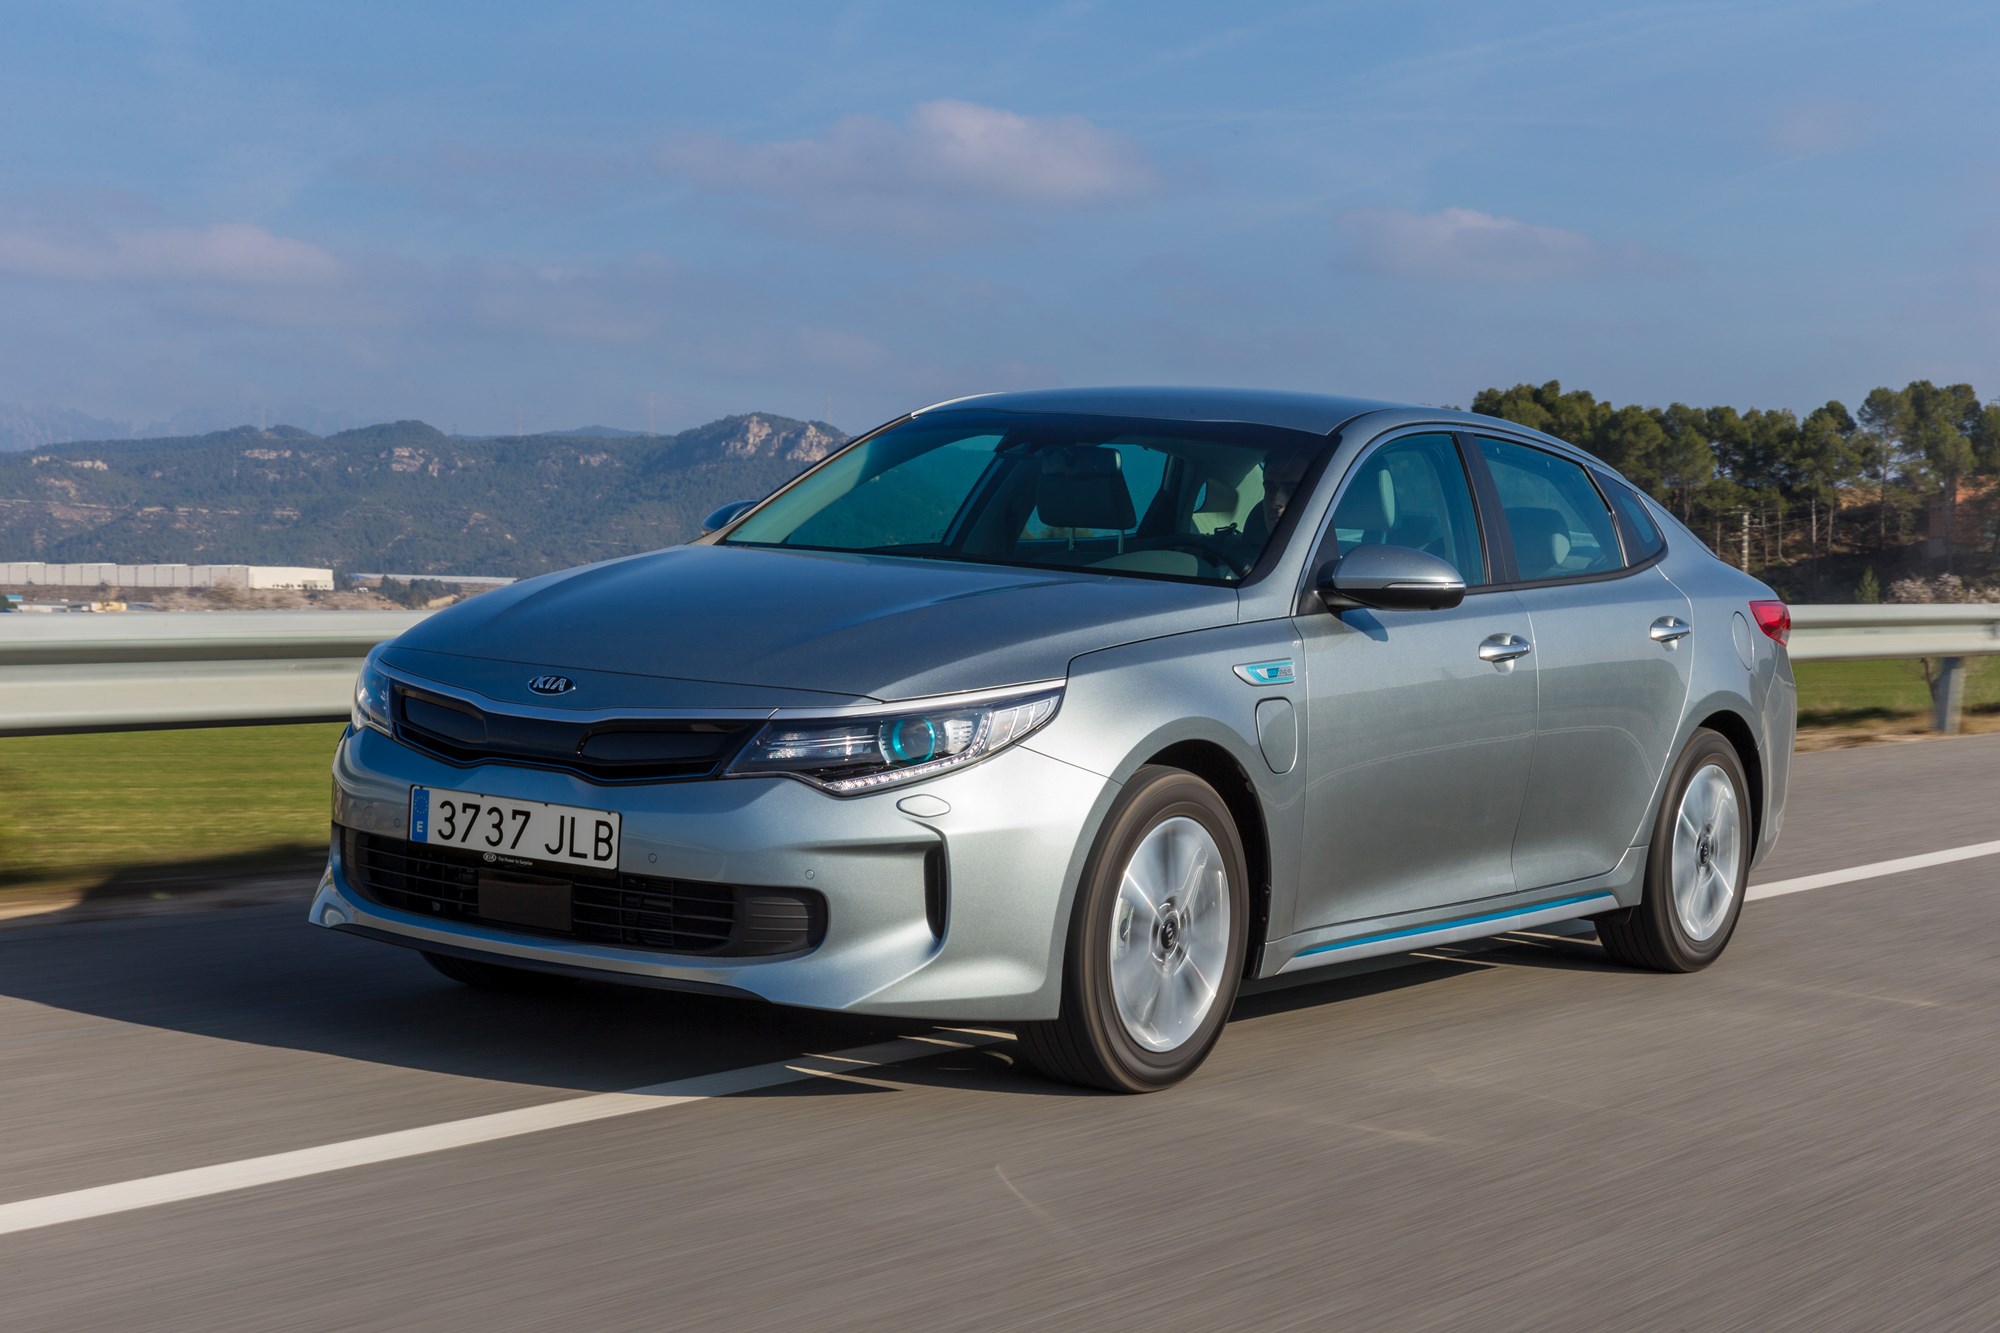 Geneva Motor Show: Kia enters new segments with three new models | Car